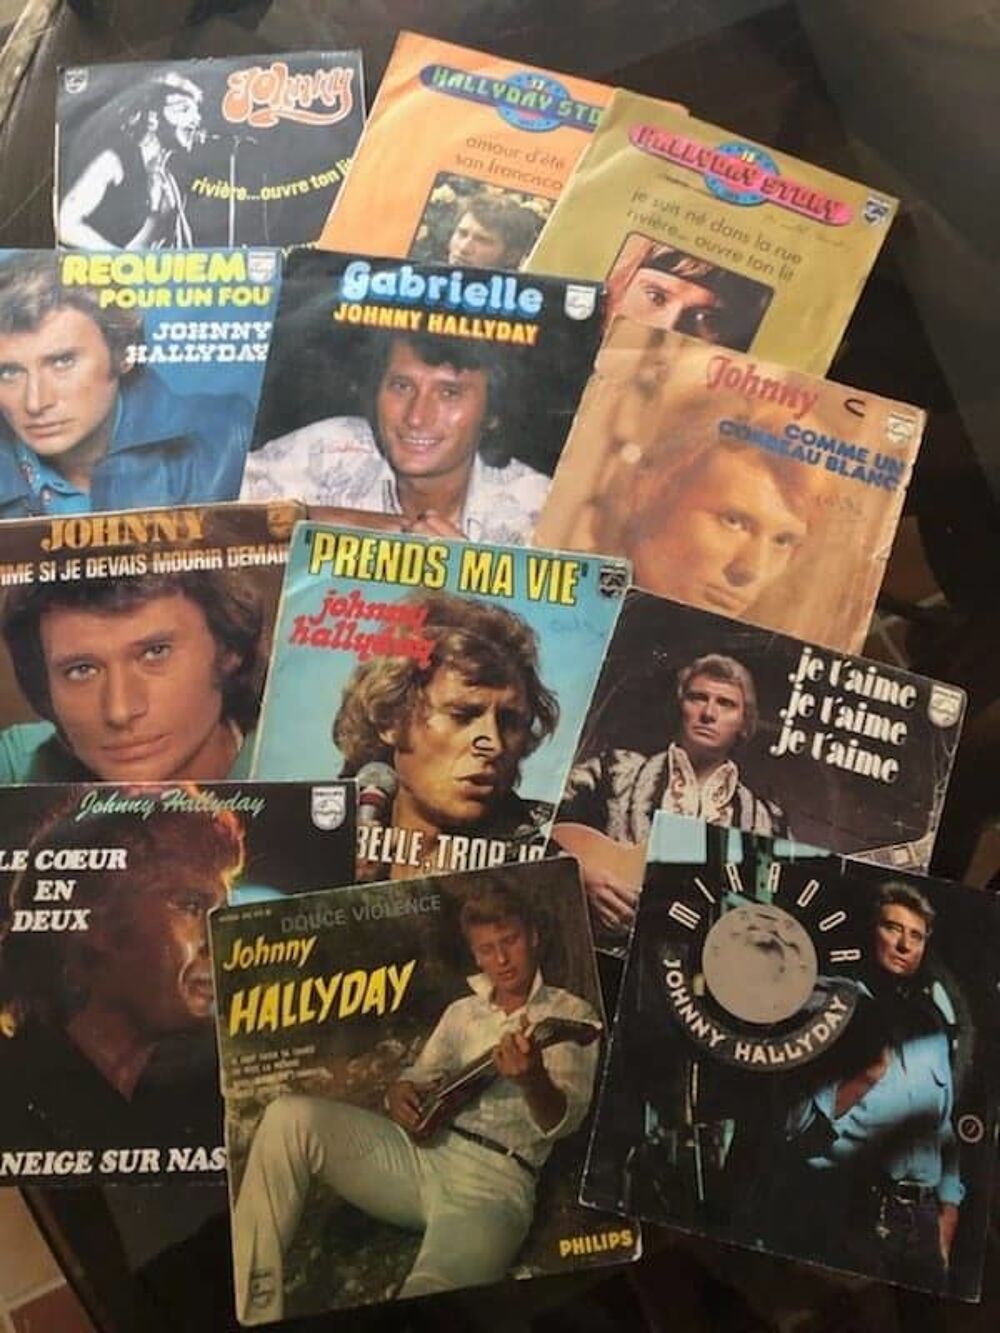 45 Tours Hallyday et Presley CD et vinyles